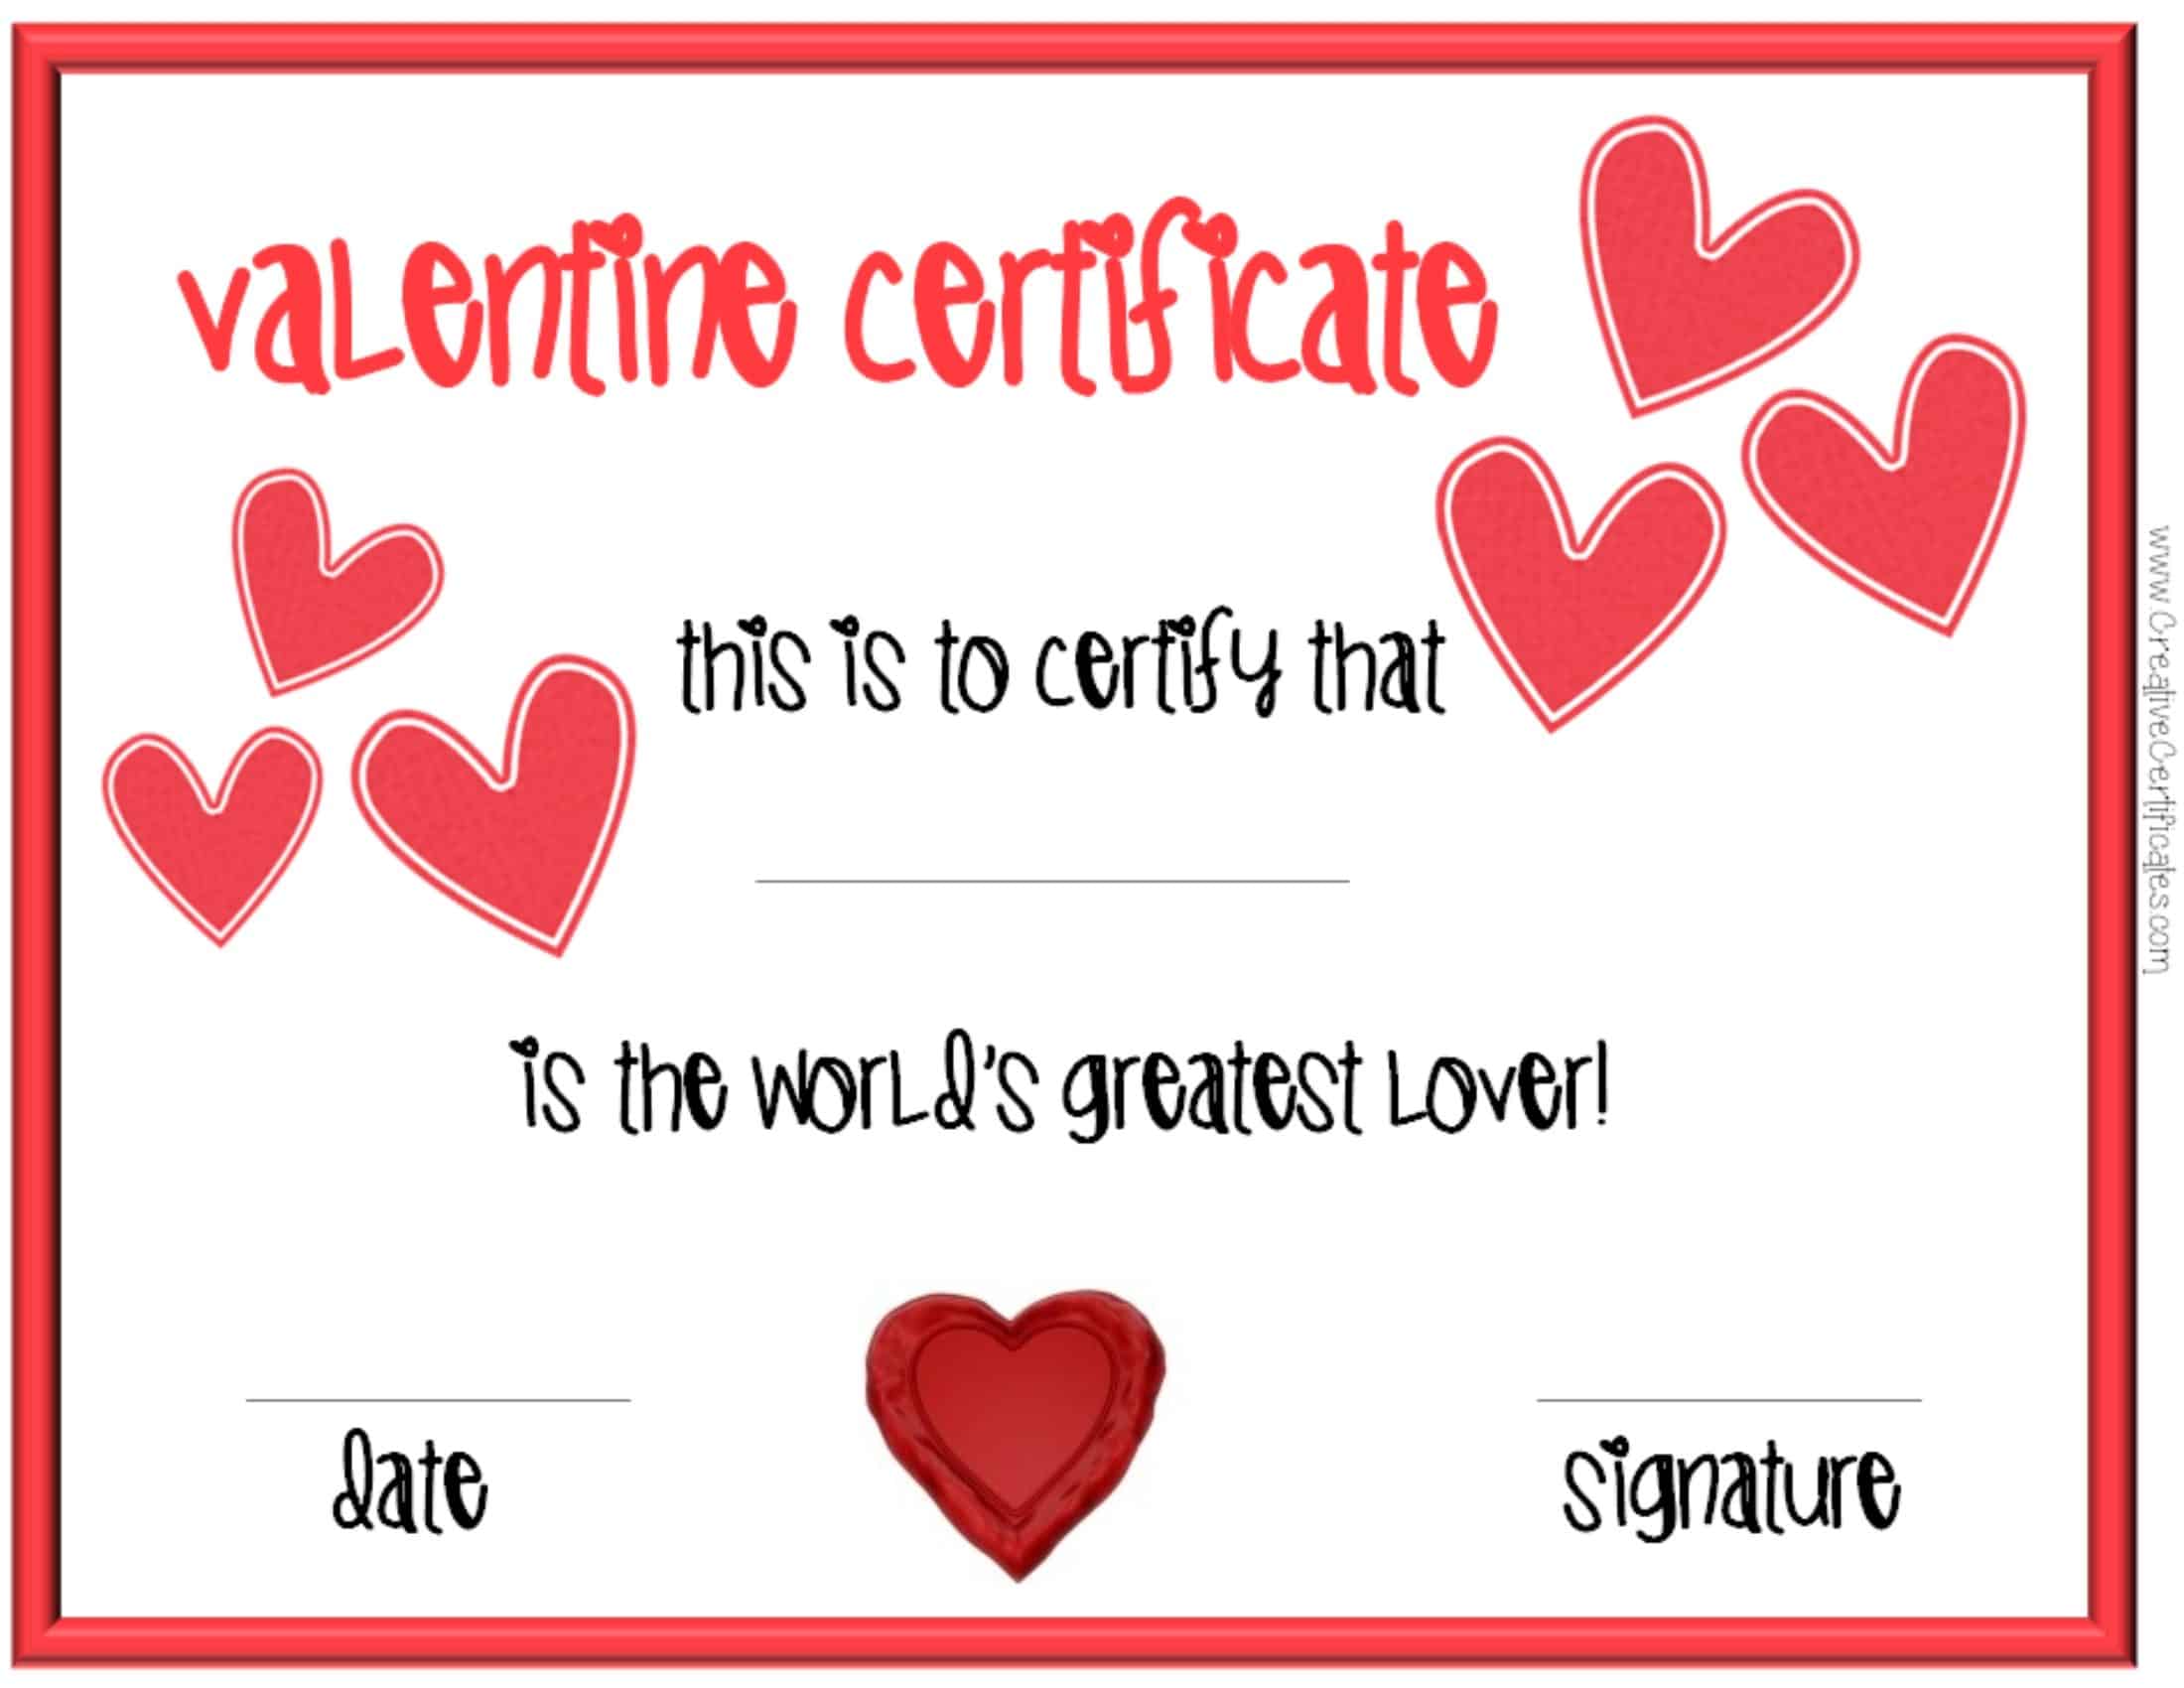 Valentine's Day Certificates